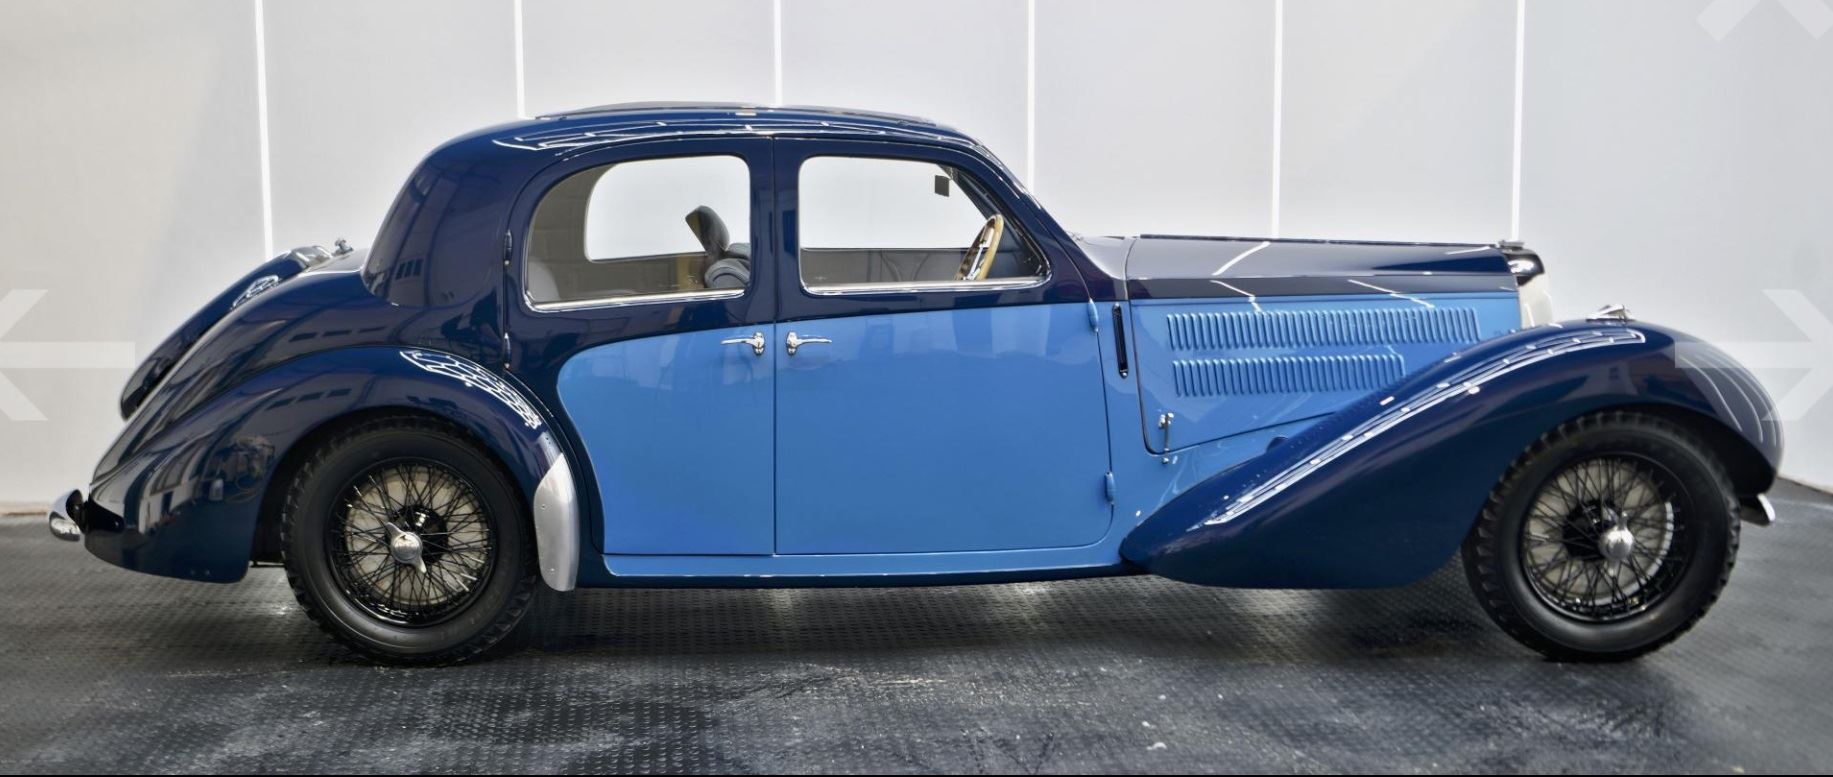 Bugatti type 57 avcldkowvtm4hqdhcpwwf